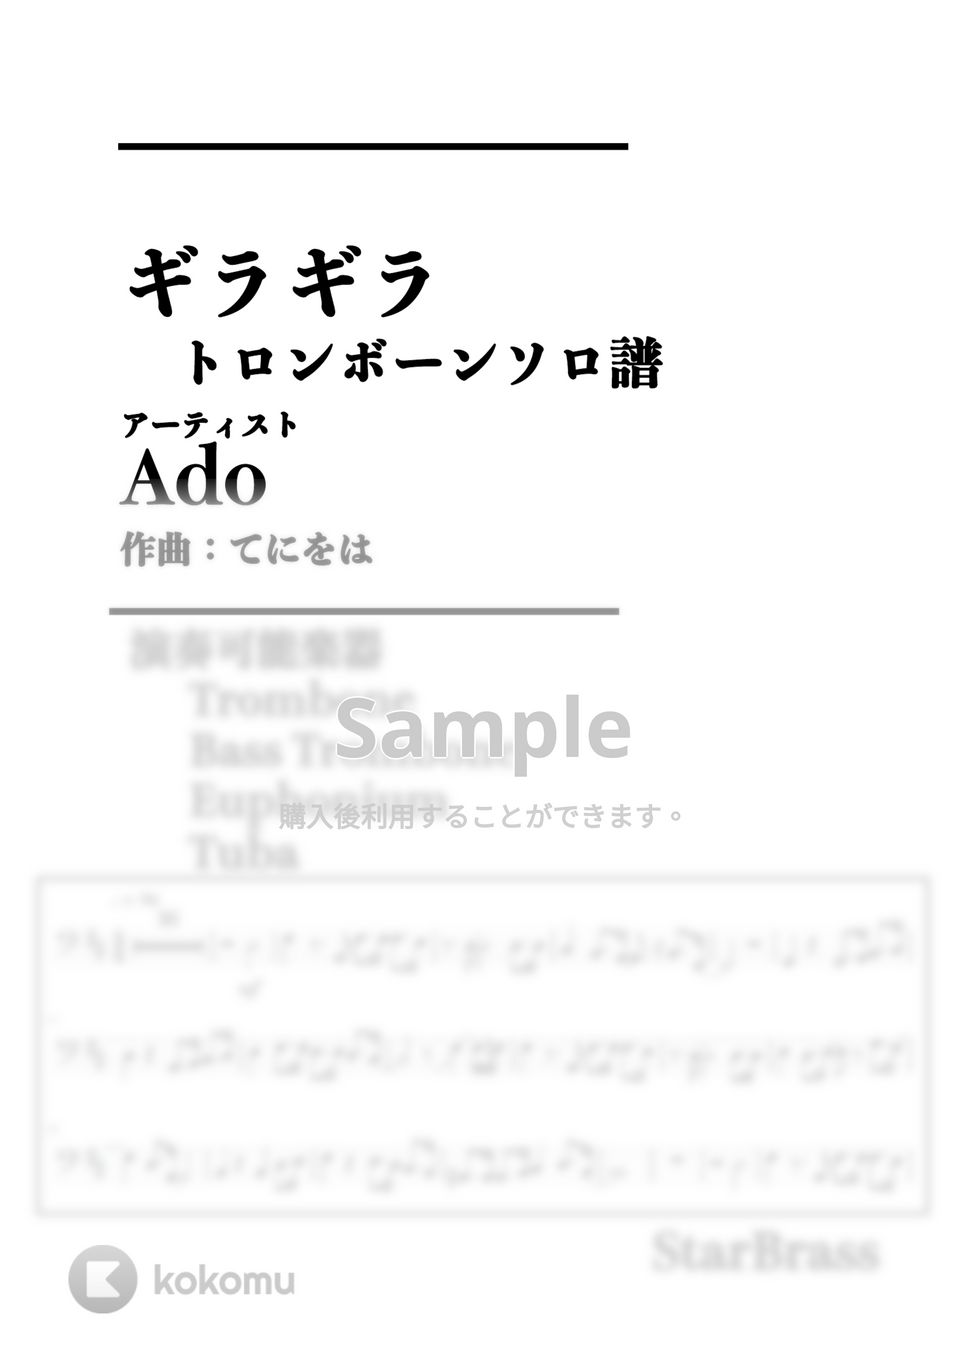 Ado - ギラギラ (-トロンボーンソロ譜- 原キー) by Creampuff